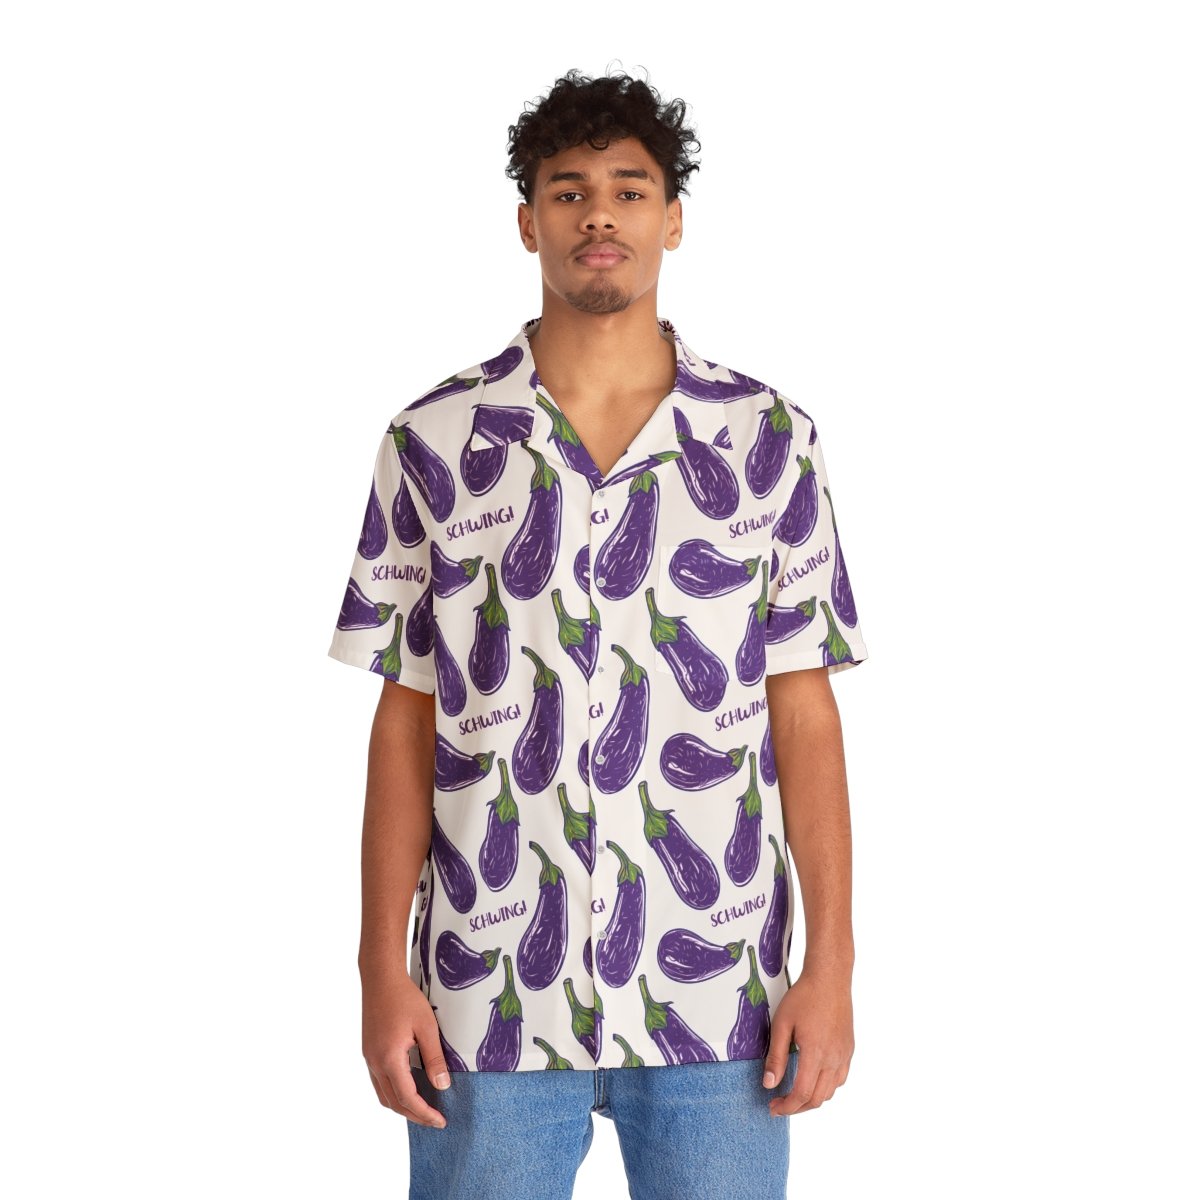 Doodle Eggplant Emoji - Text Schwing - Purple Green on White - Men's Hawaiian Shirt